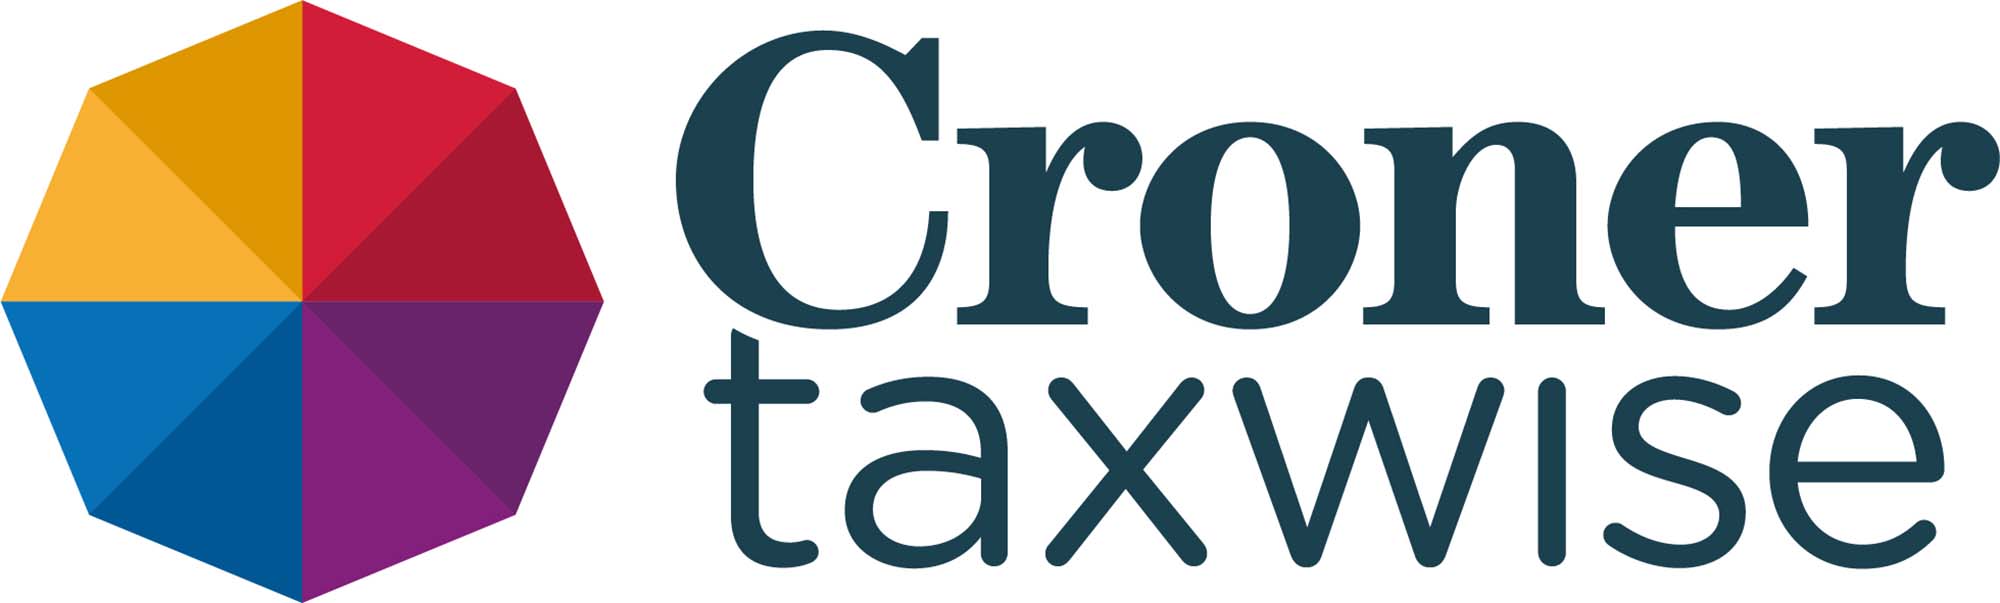 Croner Taxwise logo